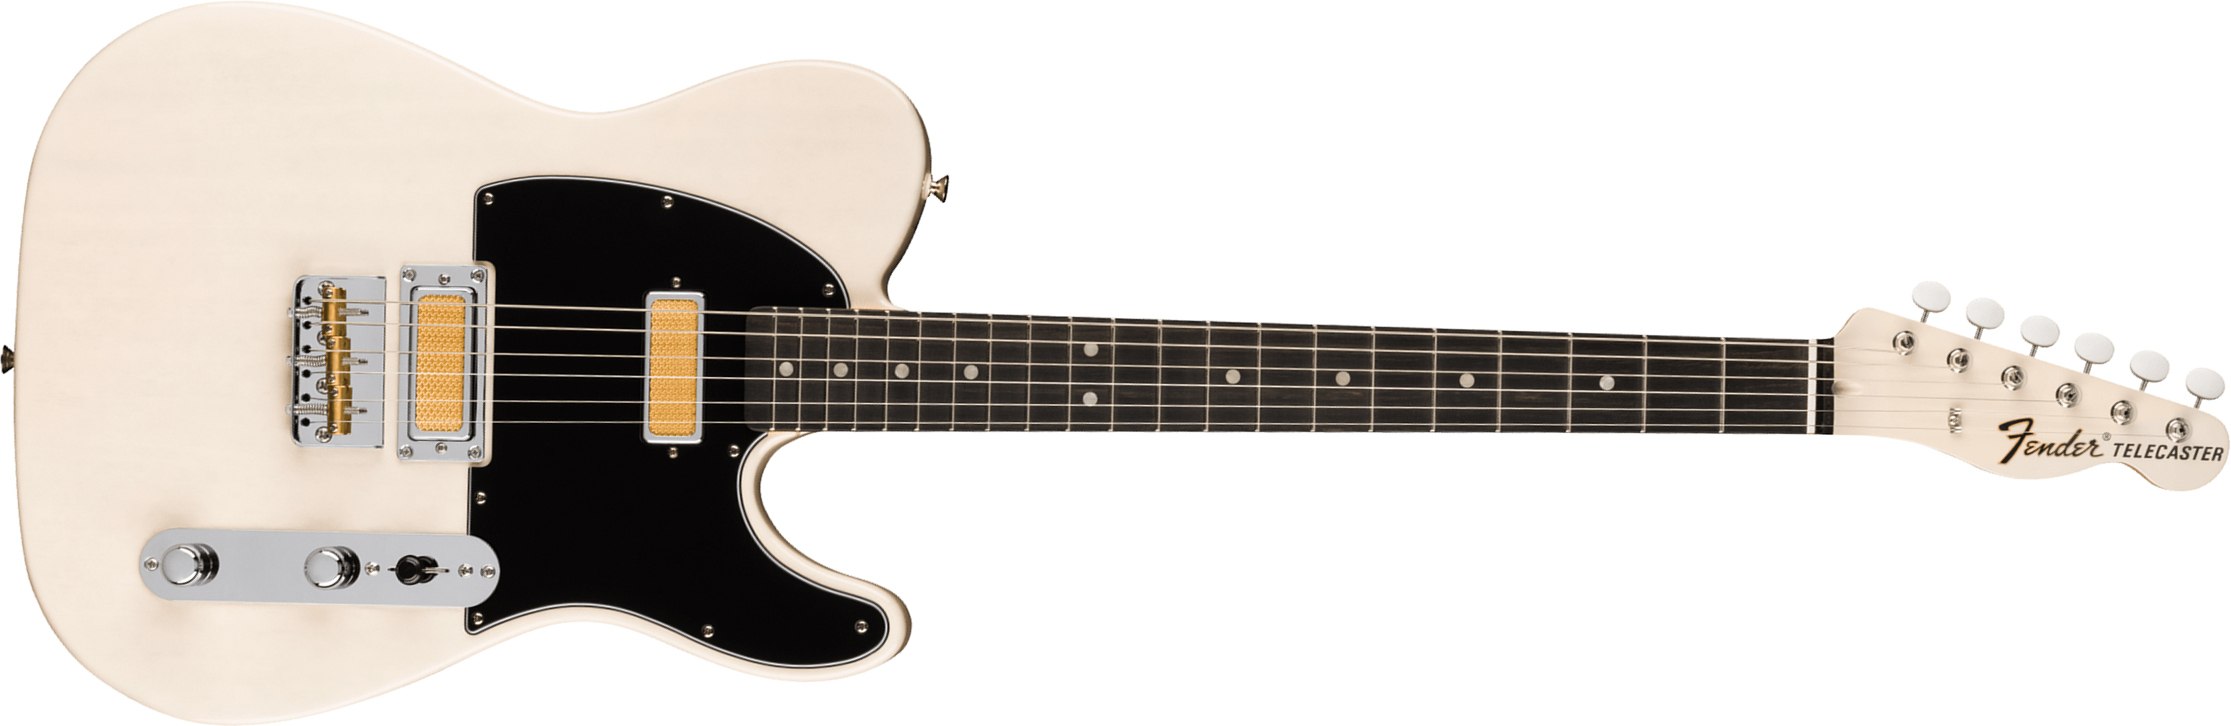 Fender Tele Gold Foil Ltd Mex 2mh Ht Eb - White Blonde - Tel shape electric guitar - Main picture